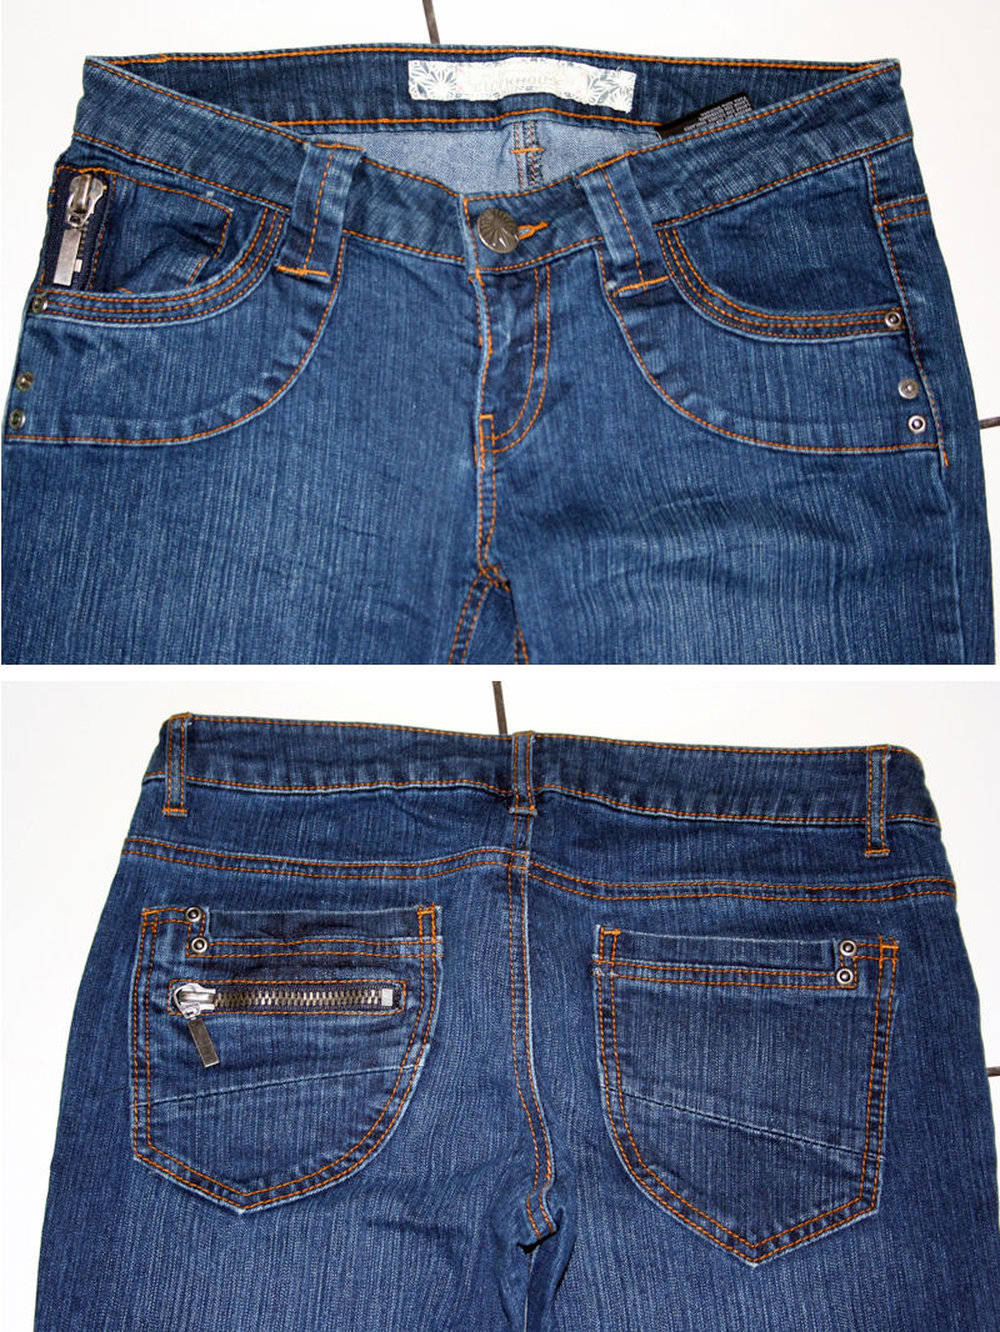 dunkelblaue Damen Jeans Gr.38 | Clockhouse C&A